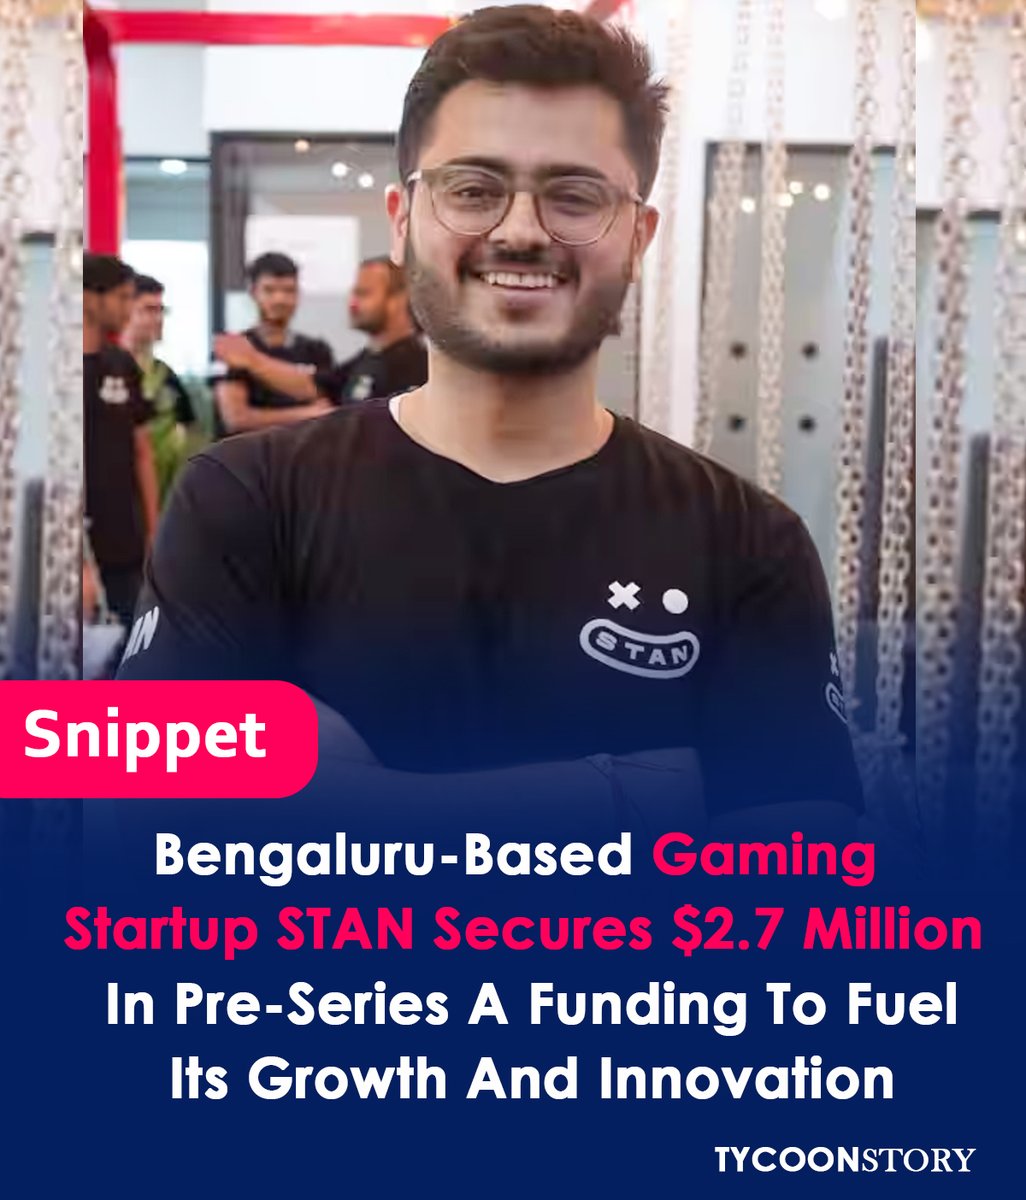 Bengaluru-based Gaming Startup STAN Raises $2.7 Million In Pre-series A Funding With Success.

#STAN #Funding #GamingStartup #BengaluruTech #investors #GamingInnovation  #gaming #StartUpFunding #GamingIndustry #BengaluruStartups @getstanapp 

tycoonstory.com